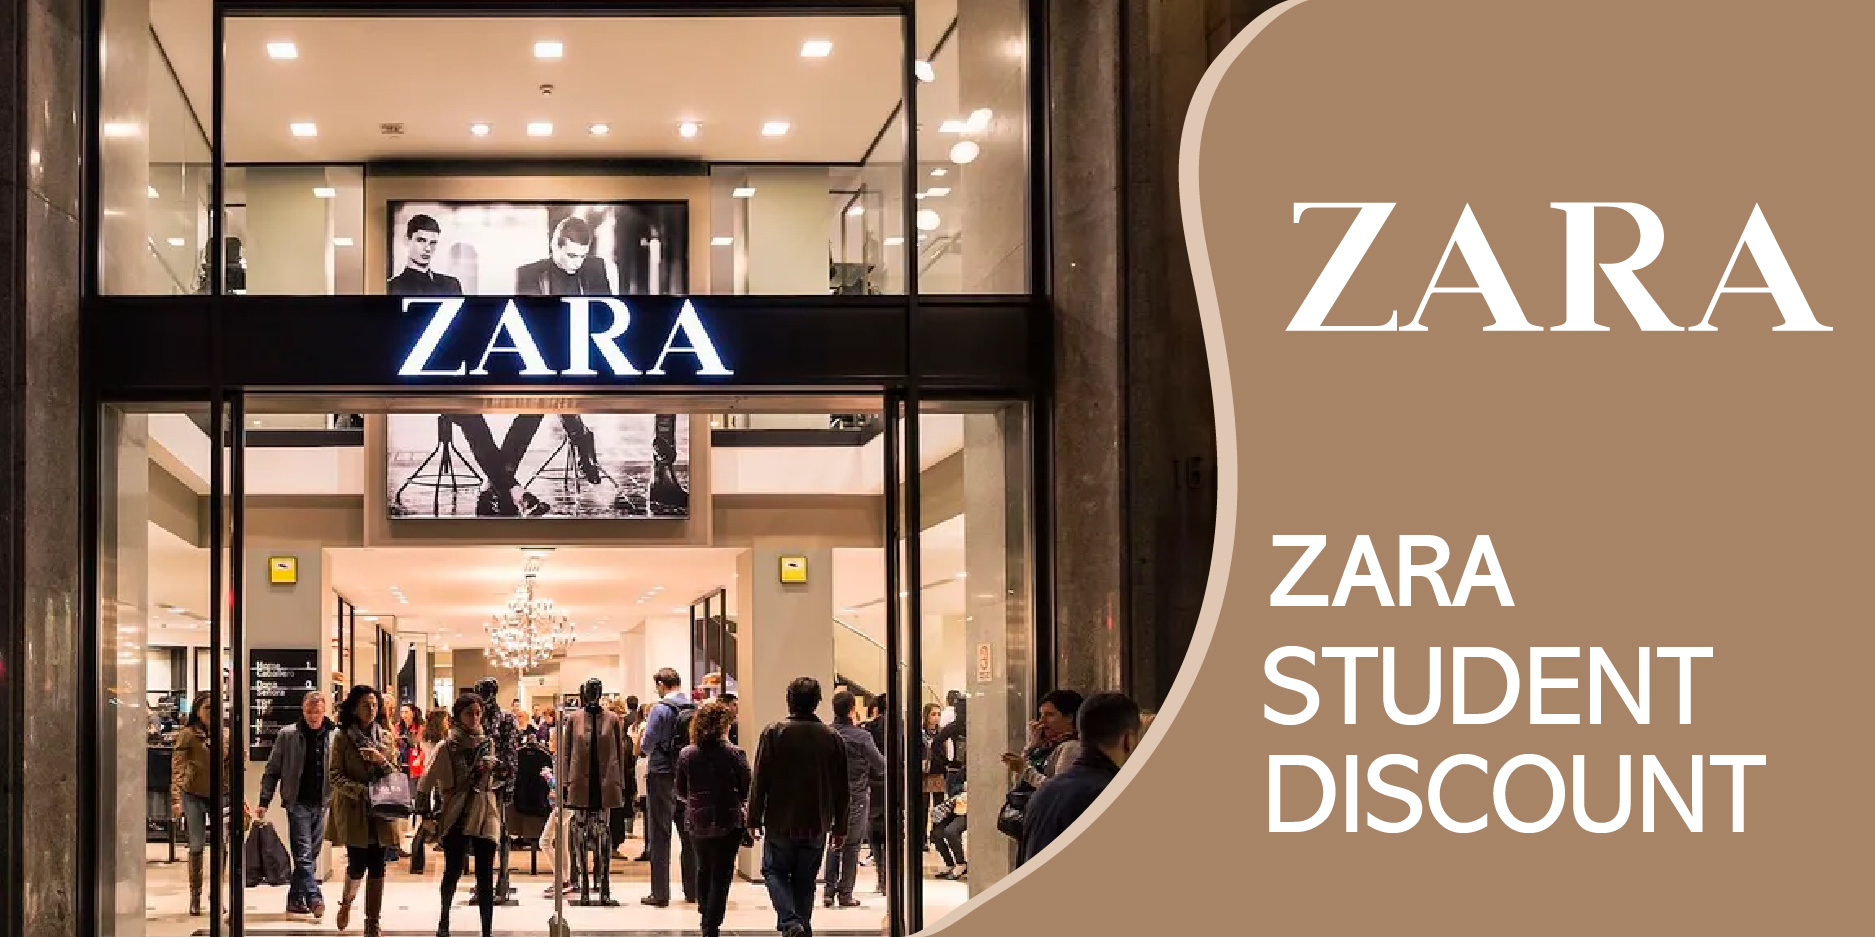 Zara Student Discount